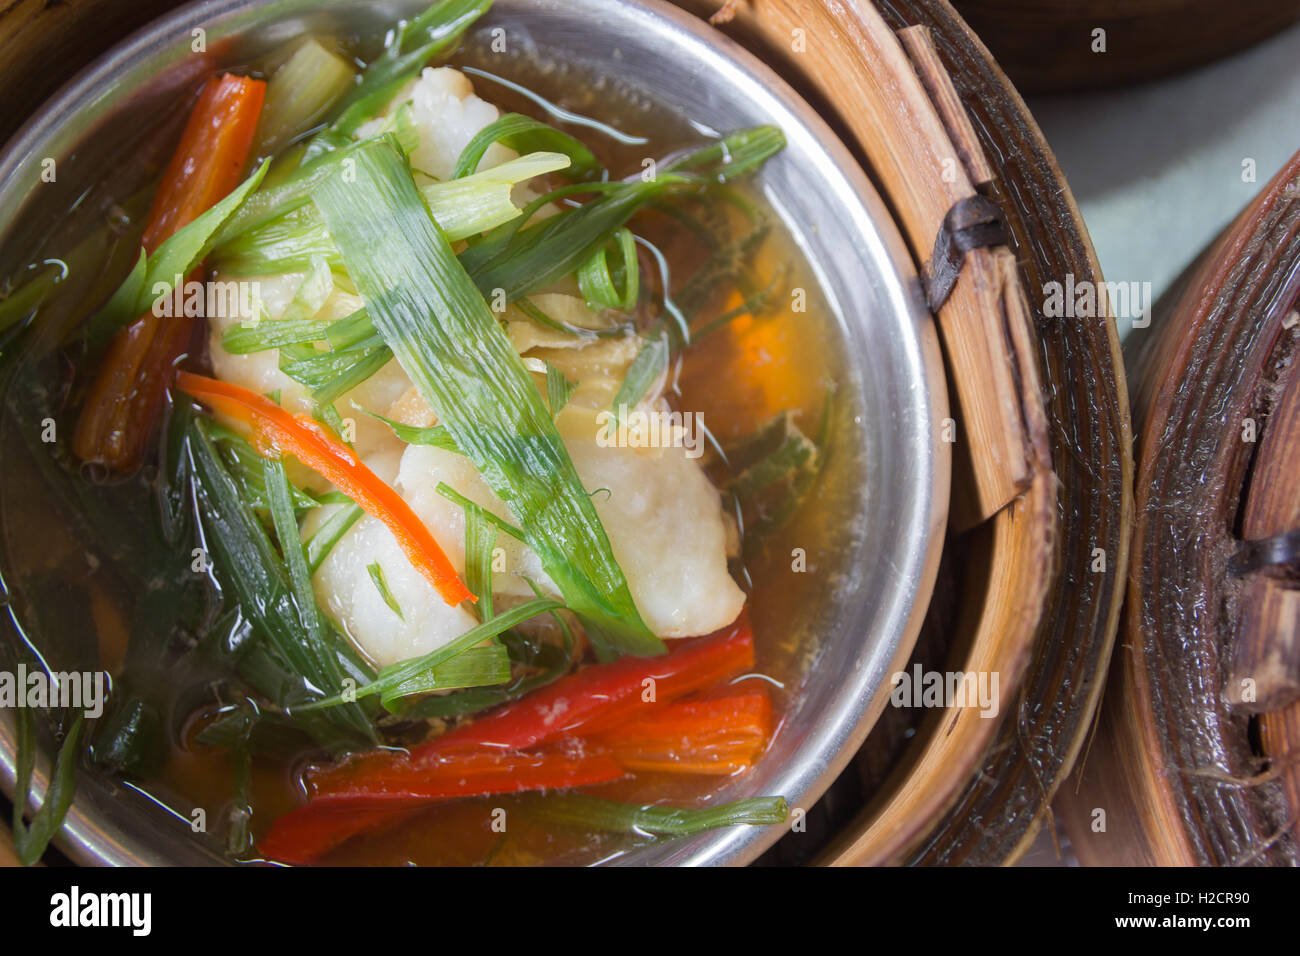 Chinese Dim Sum in bamboo steamer Stock Photo